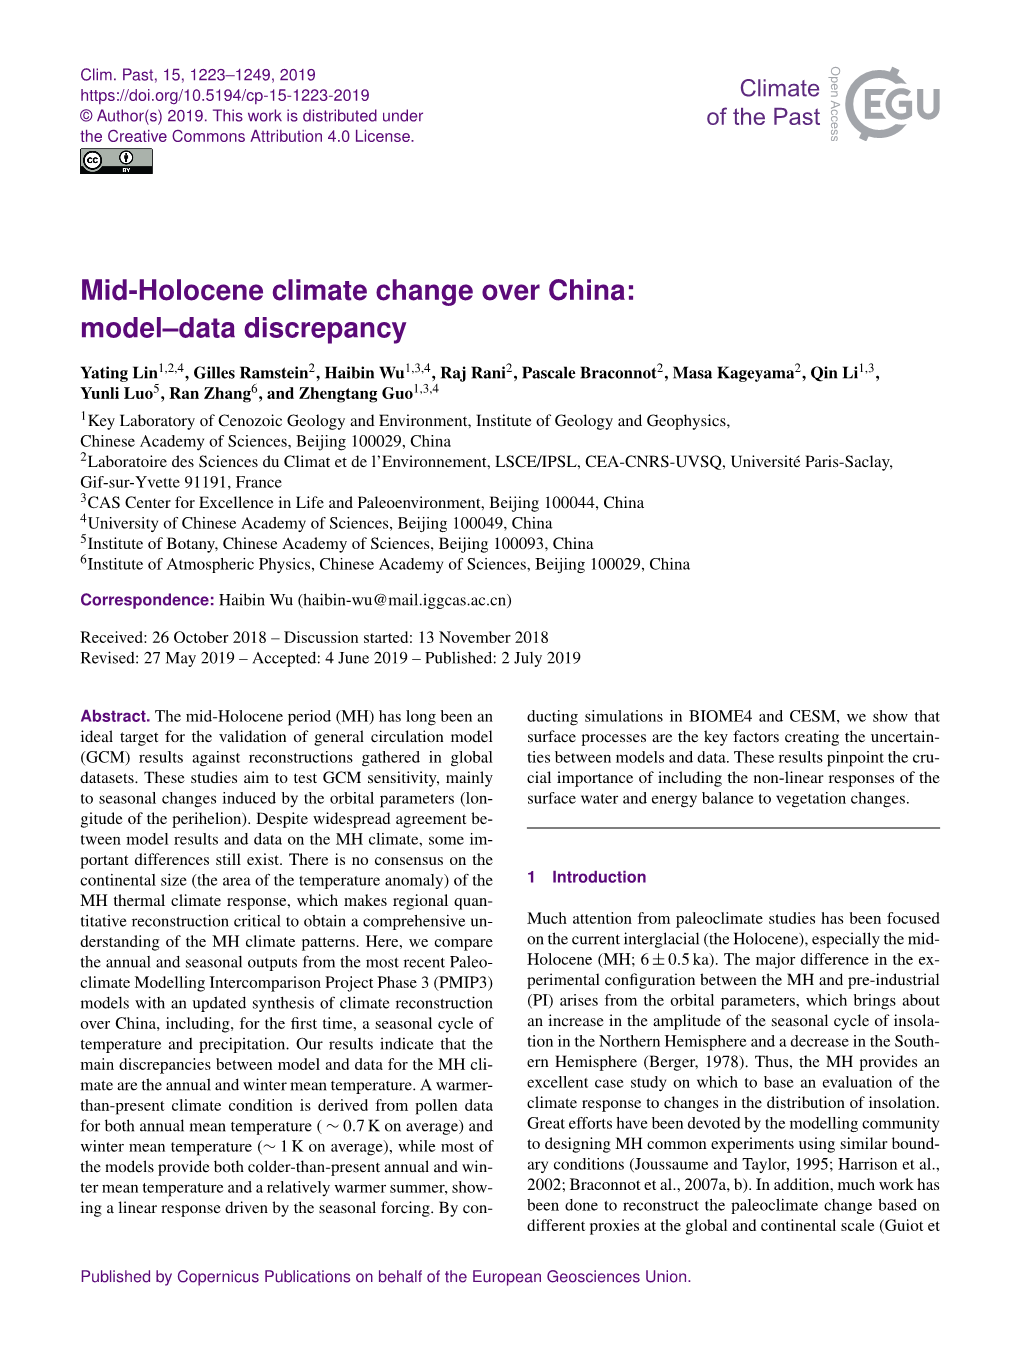 Mid-Holocene Climate Change Over China: Model–Data Discrepancy